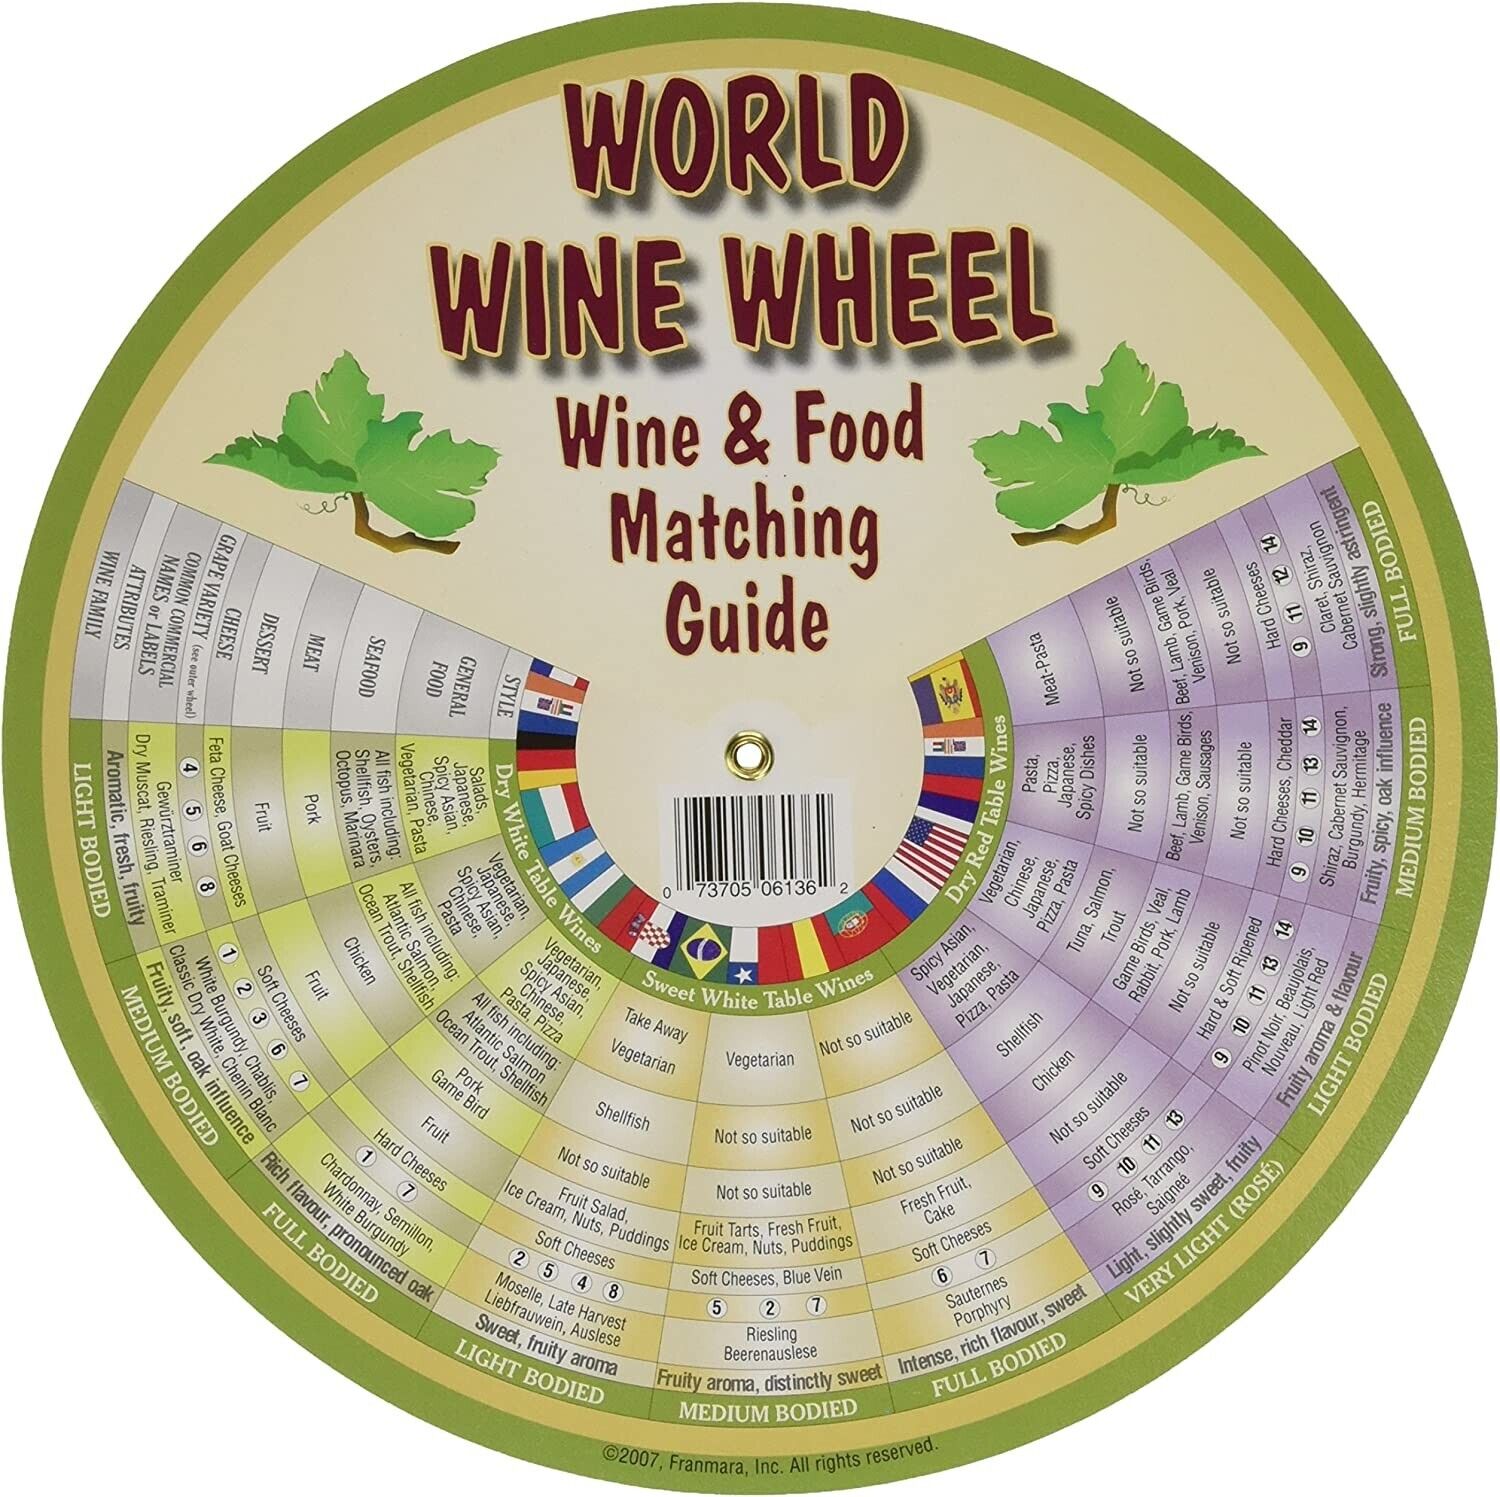 Franmara 6136-BU The World of Wine Wheel and Food Matching Guide